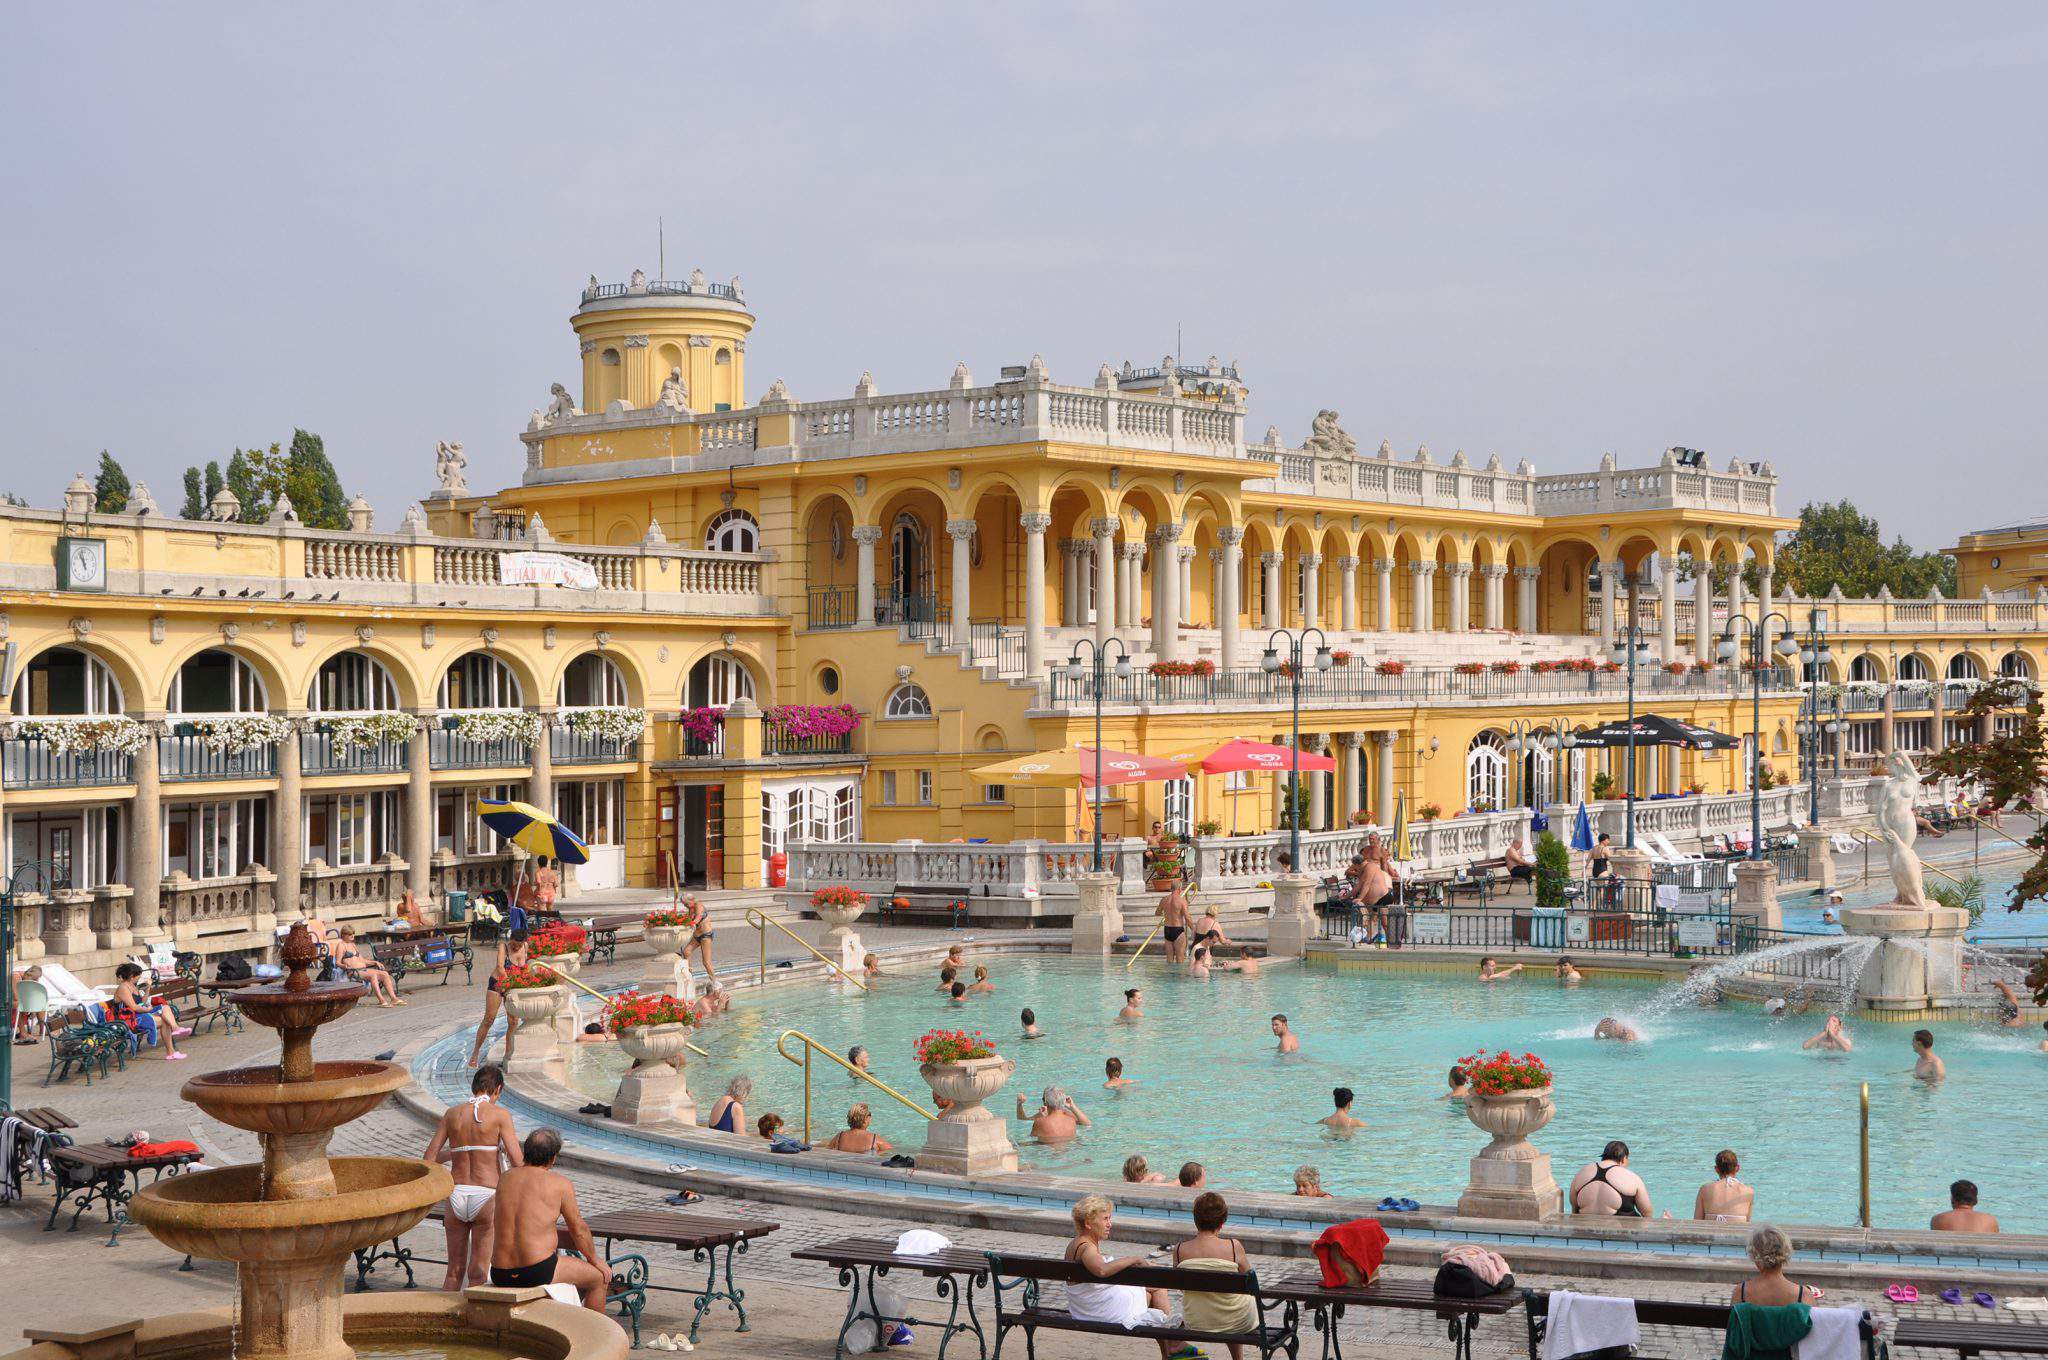 Budapest bath